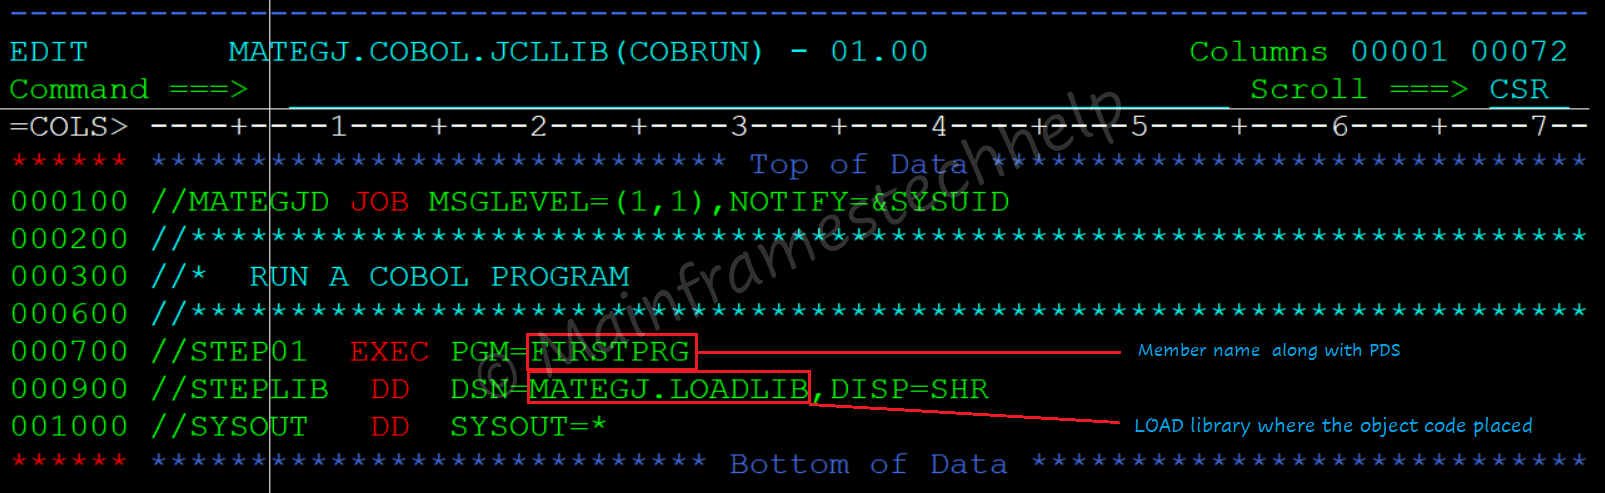 COBOL program RUN JCL